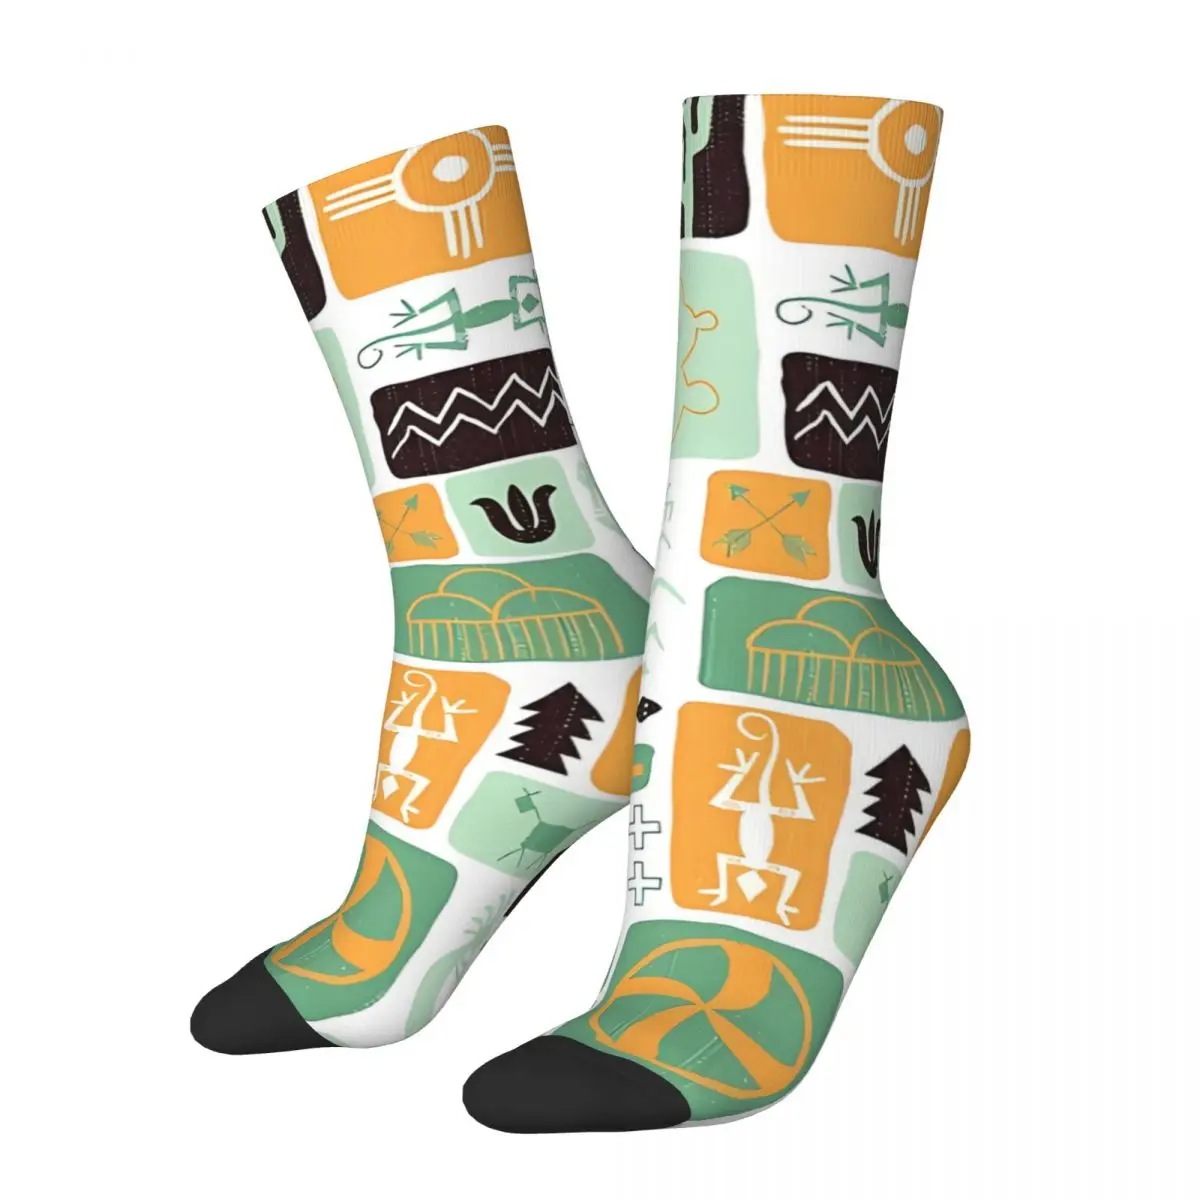 Happy Men's Socks Southwest Dreams Yellow Ocher Vintage Kokopelli Hopi Street Style Casual Crew Sock Gift Pattern Printed